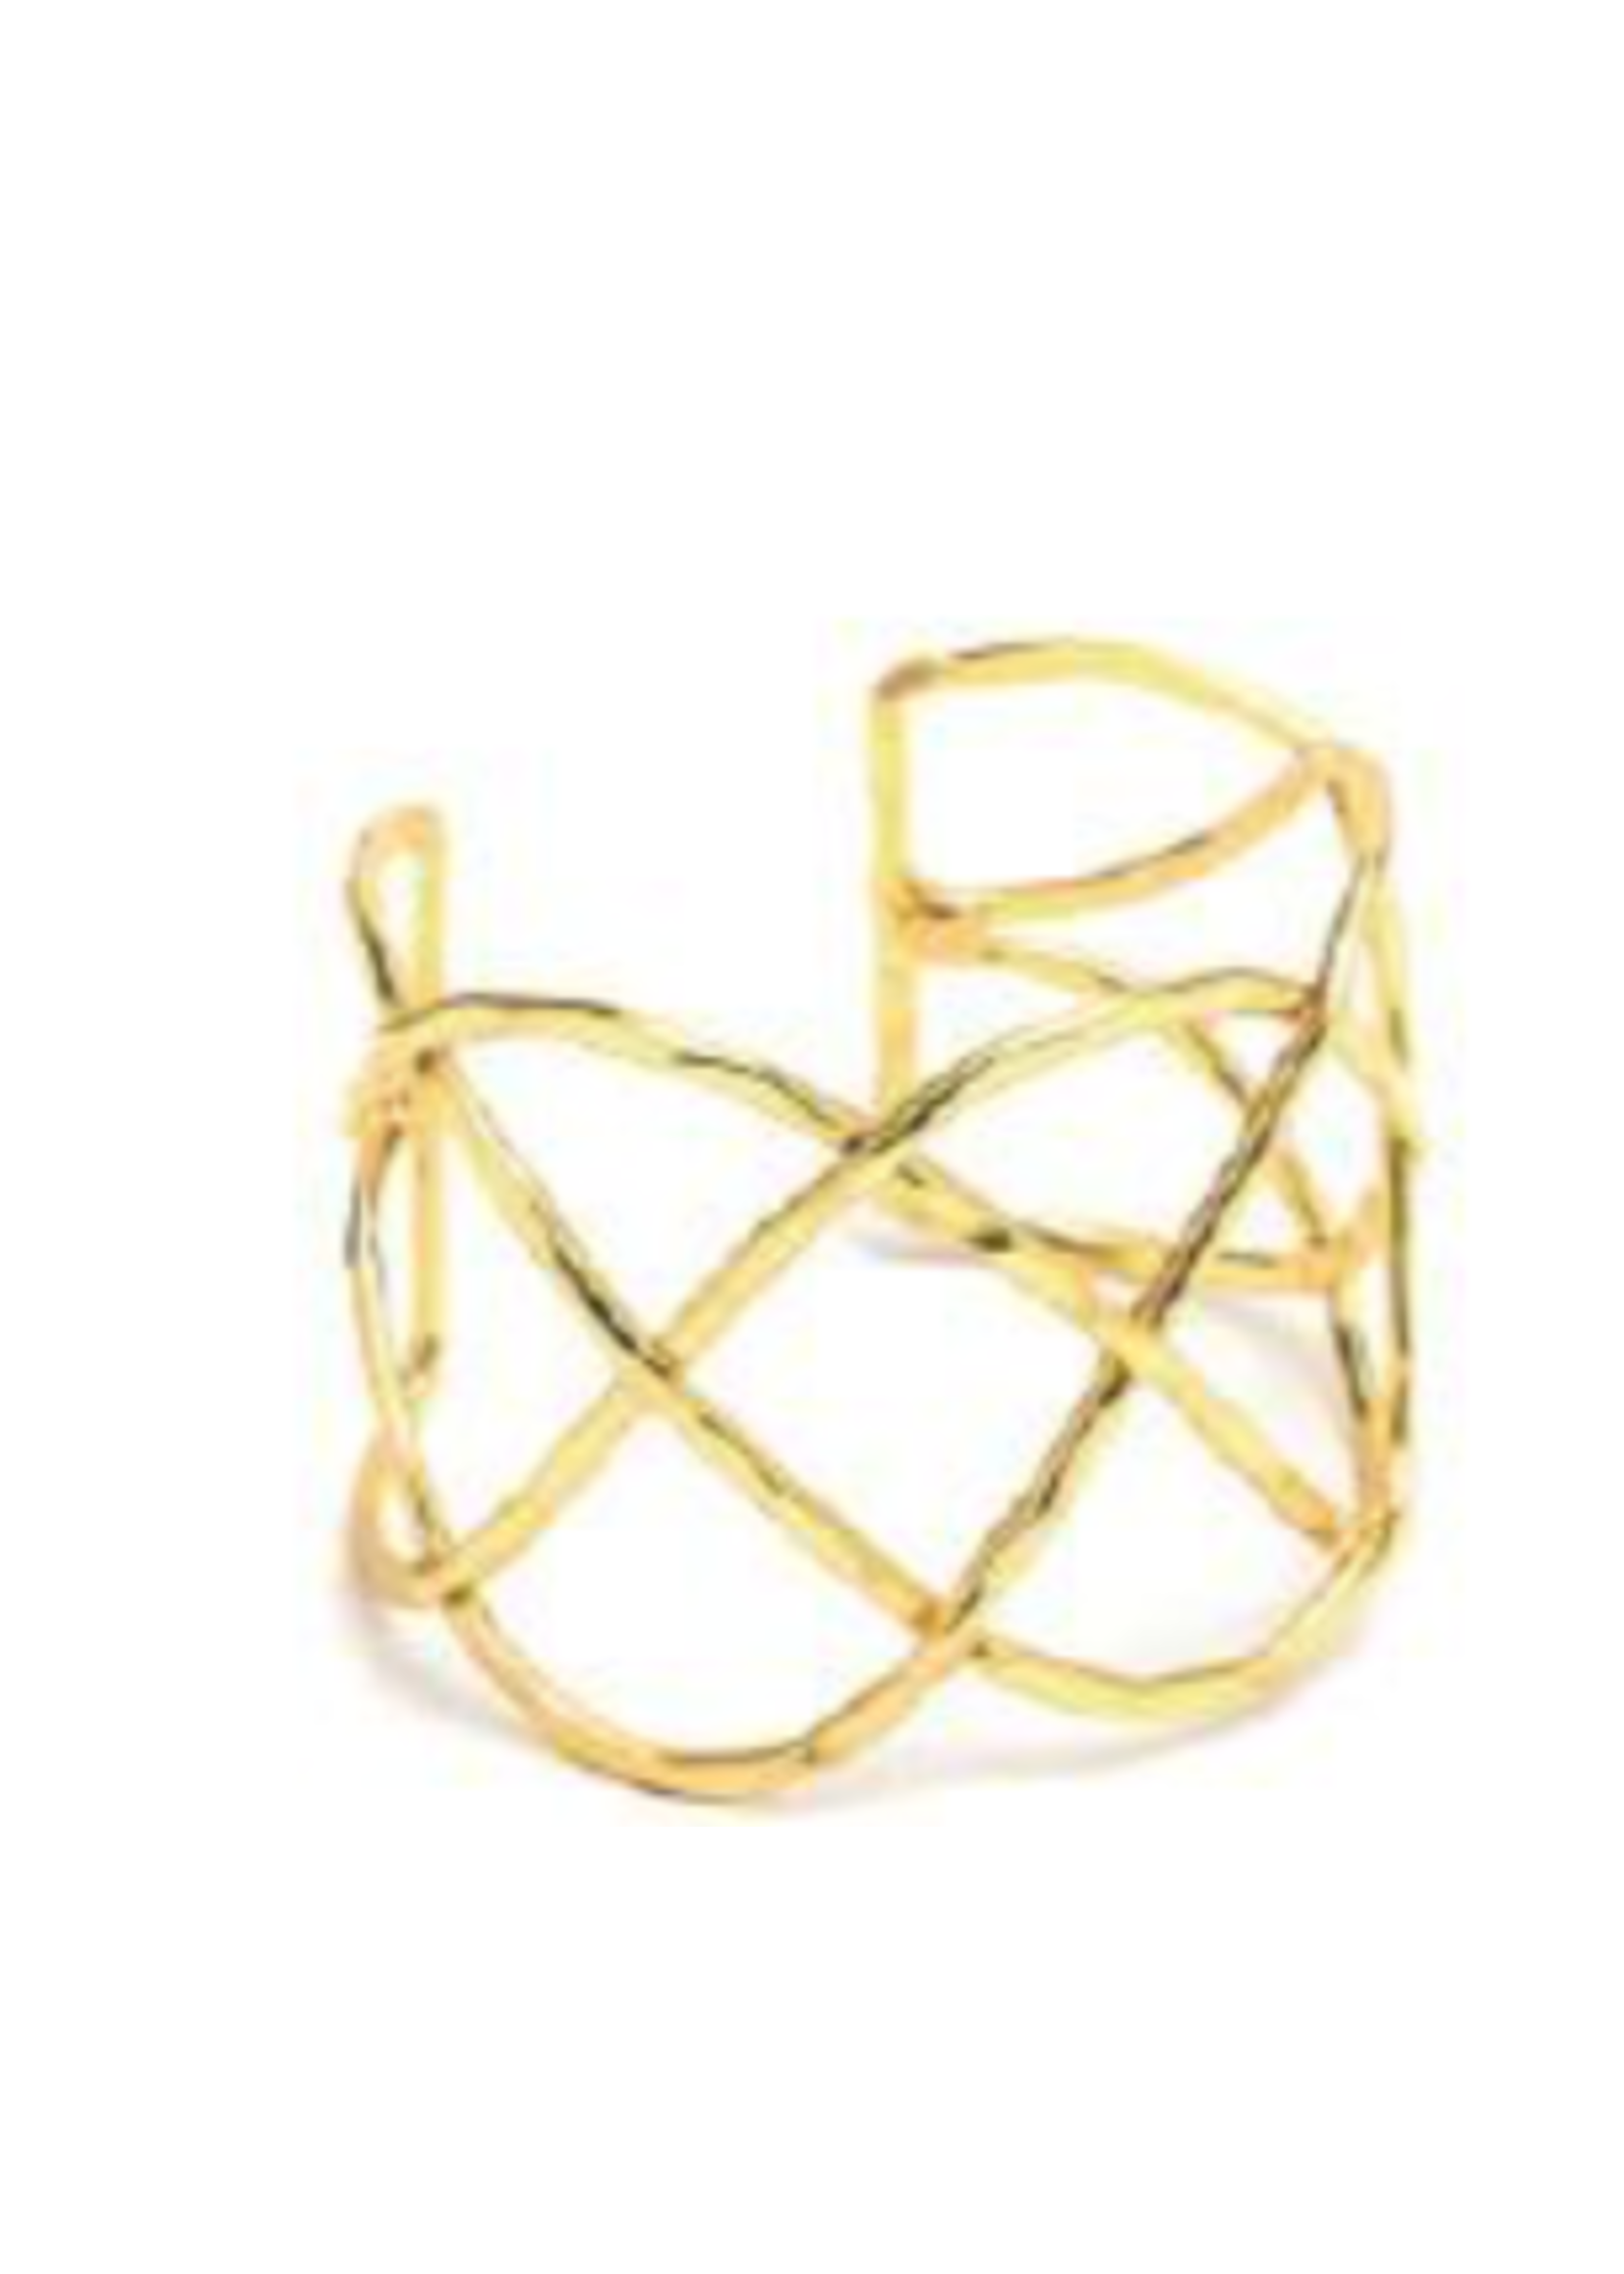 VESTOPAZZO Brass Intricate Cuff Bracelet